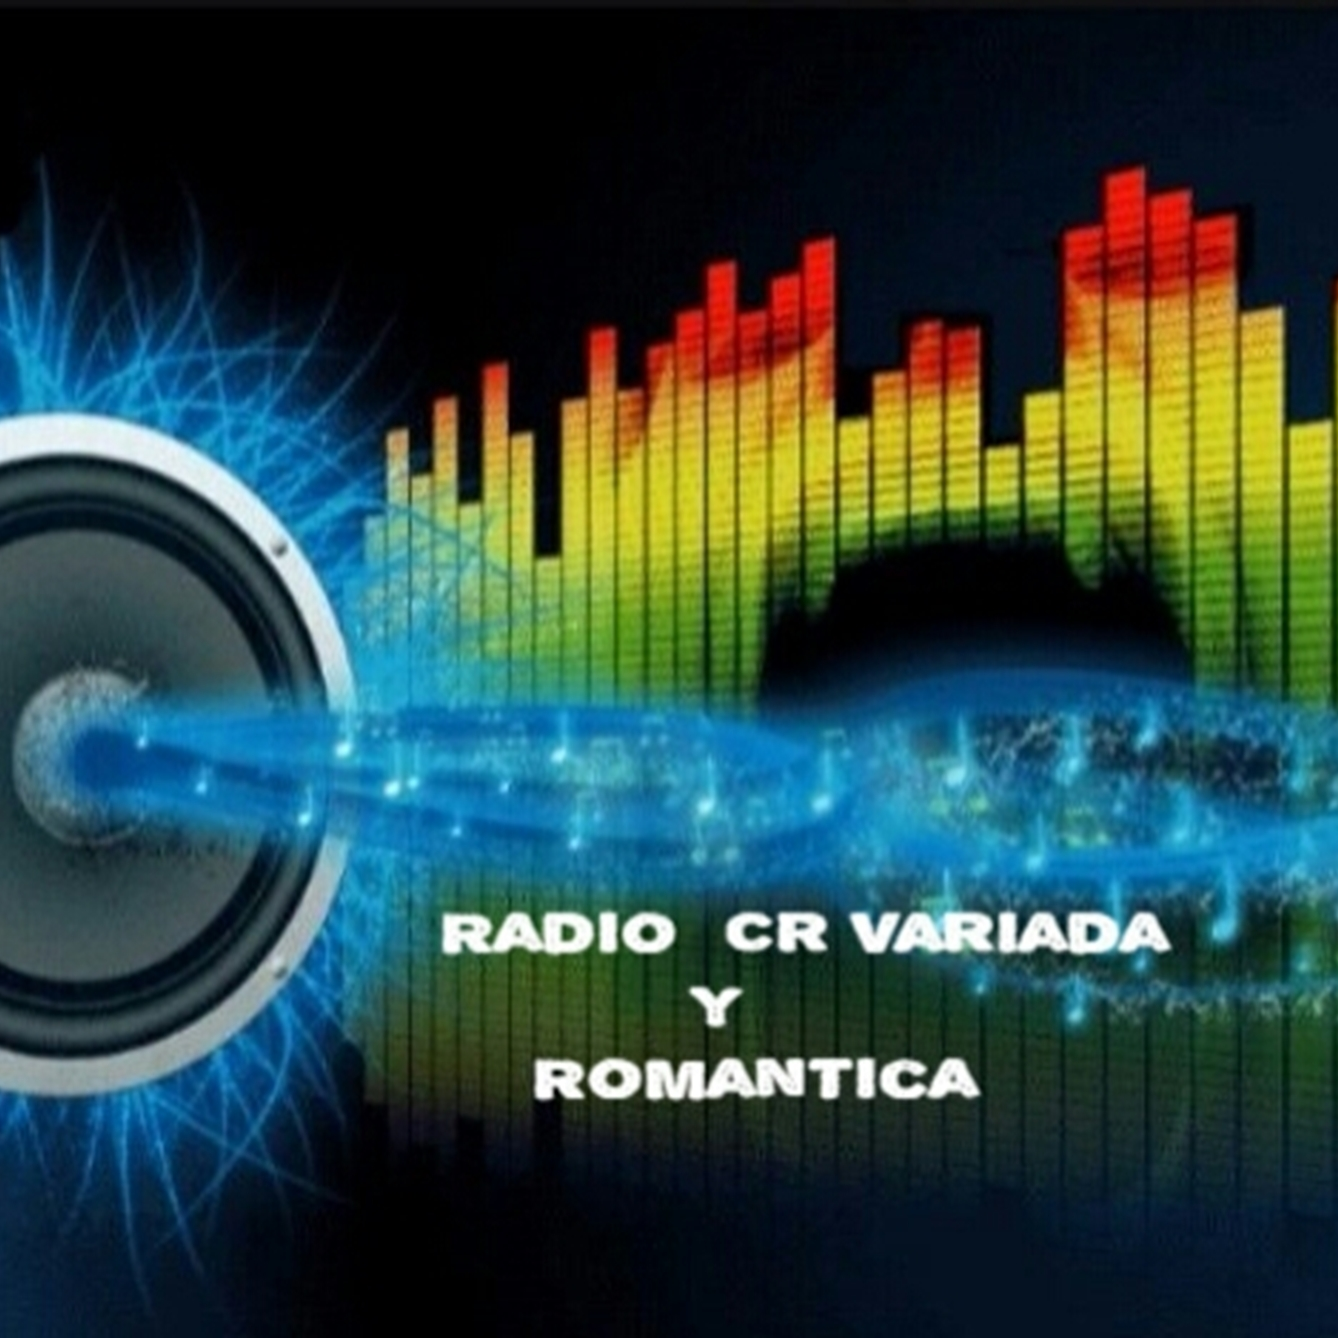 Radio Cr Variada y Romàntica